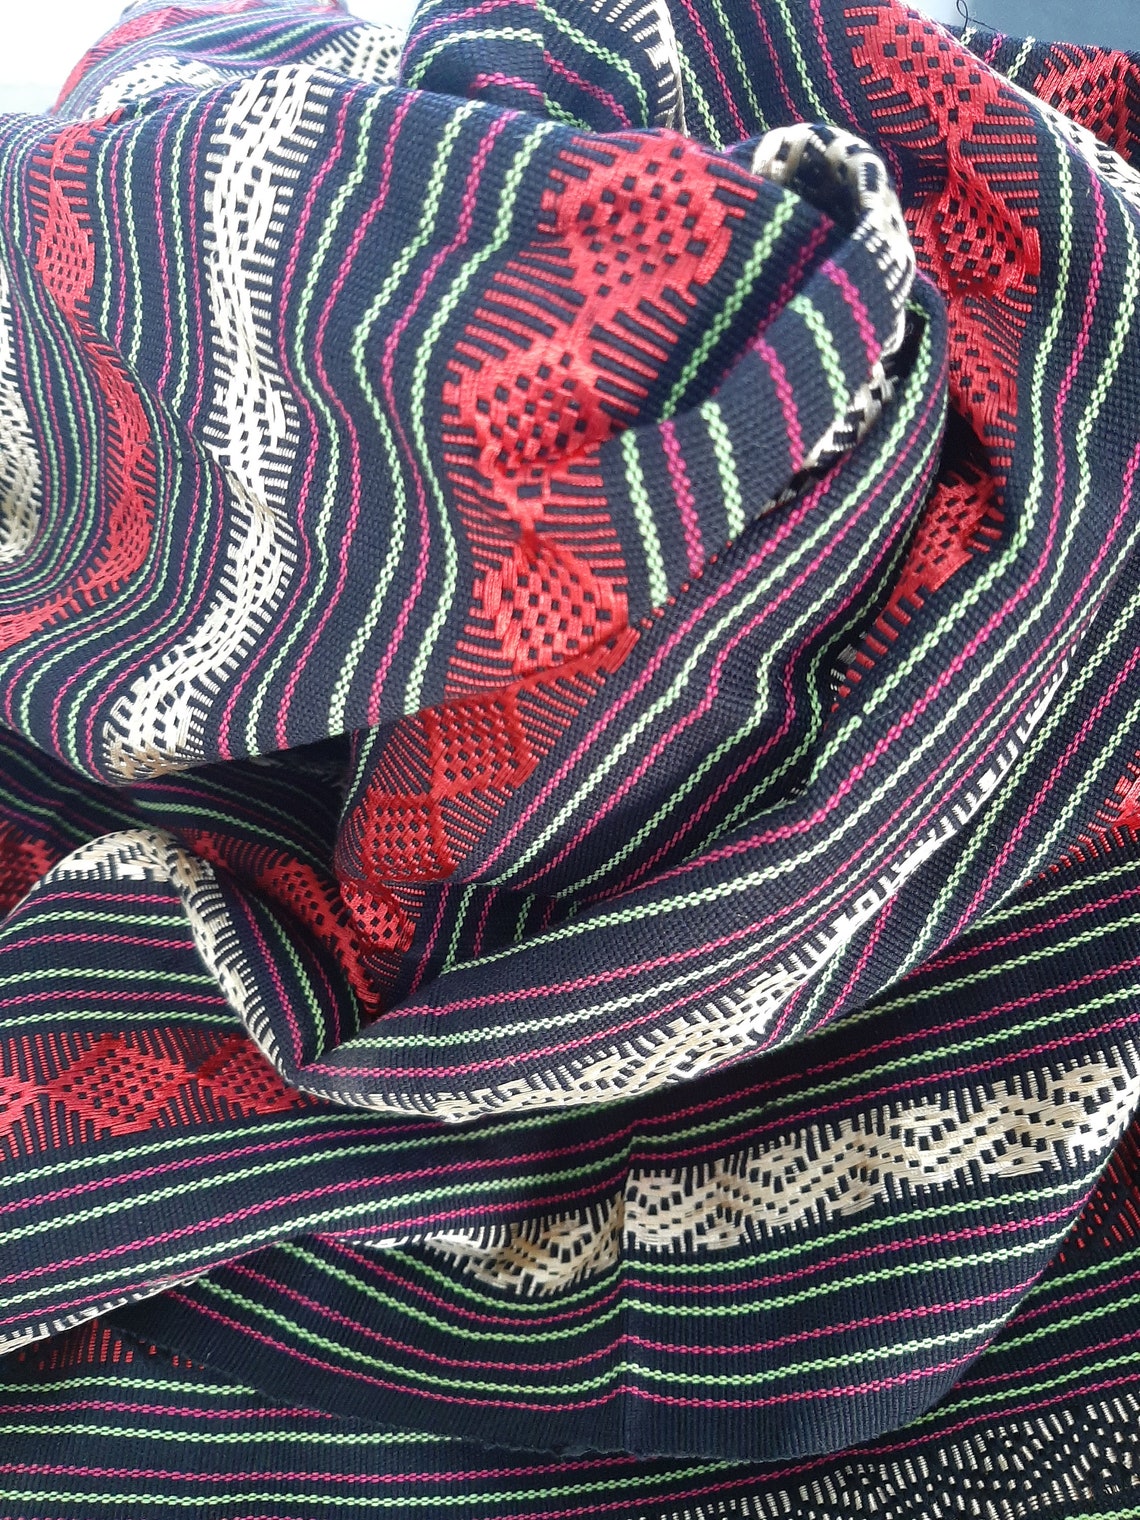 Vietnamese Brocade Fabric, Used as Bedspread or Table-cloth Etc ...